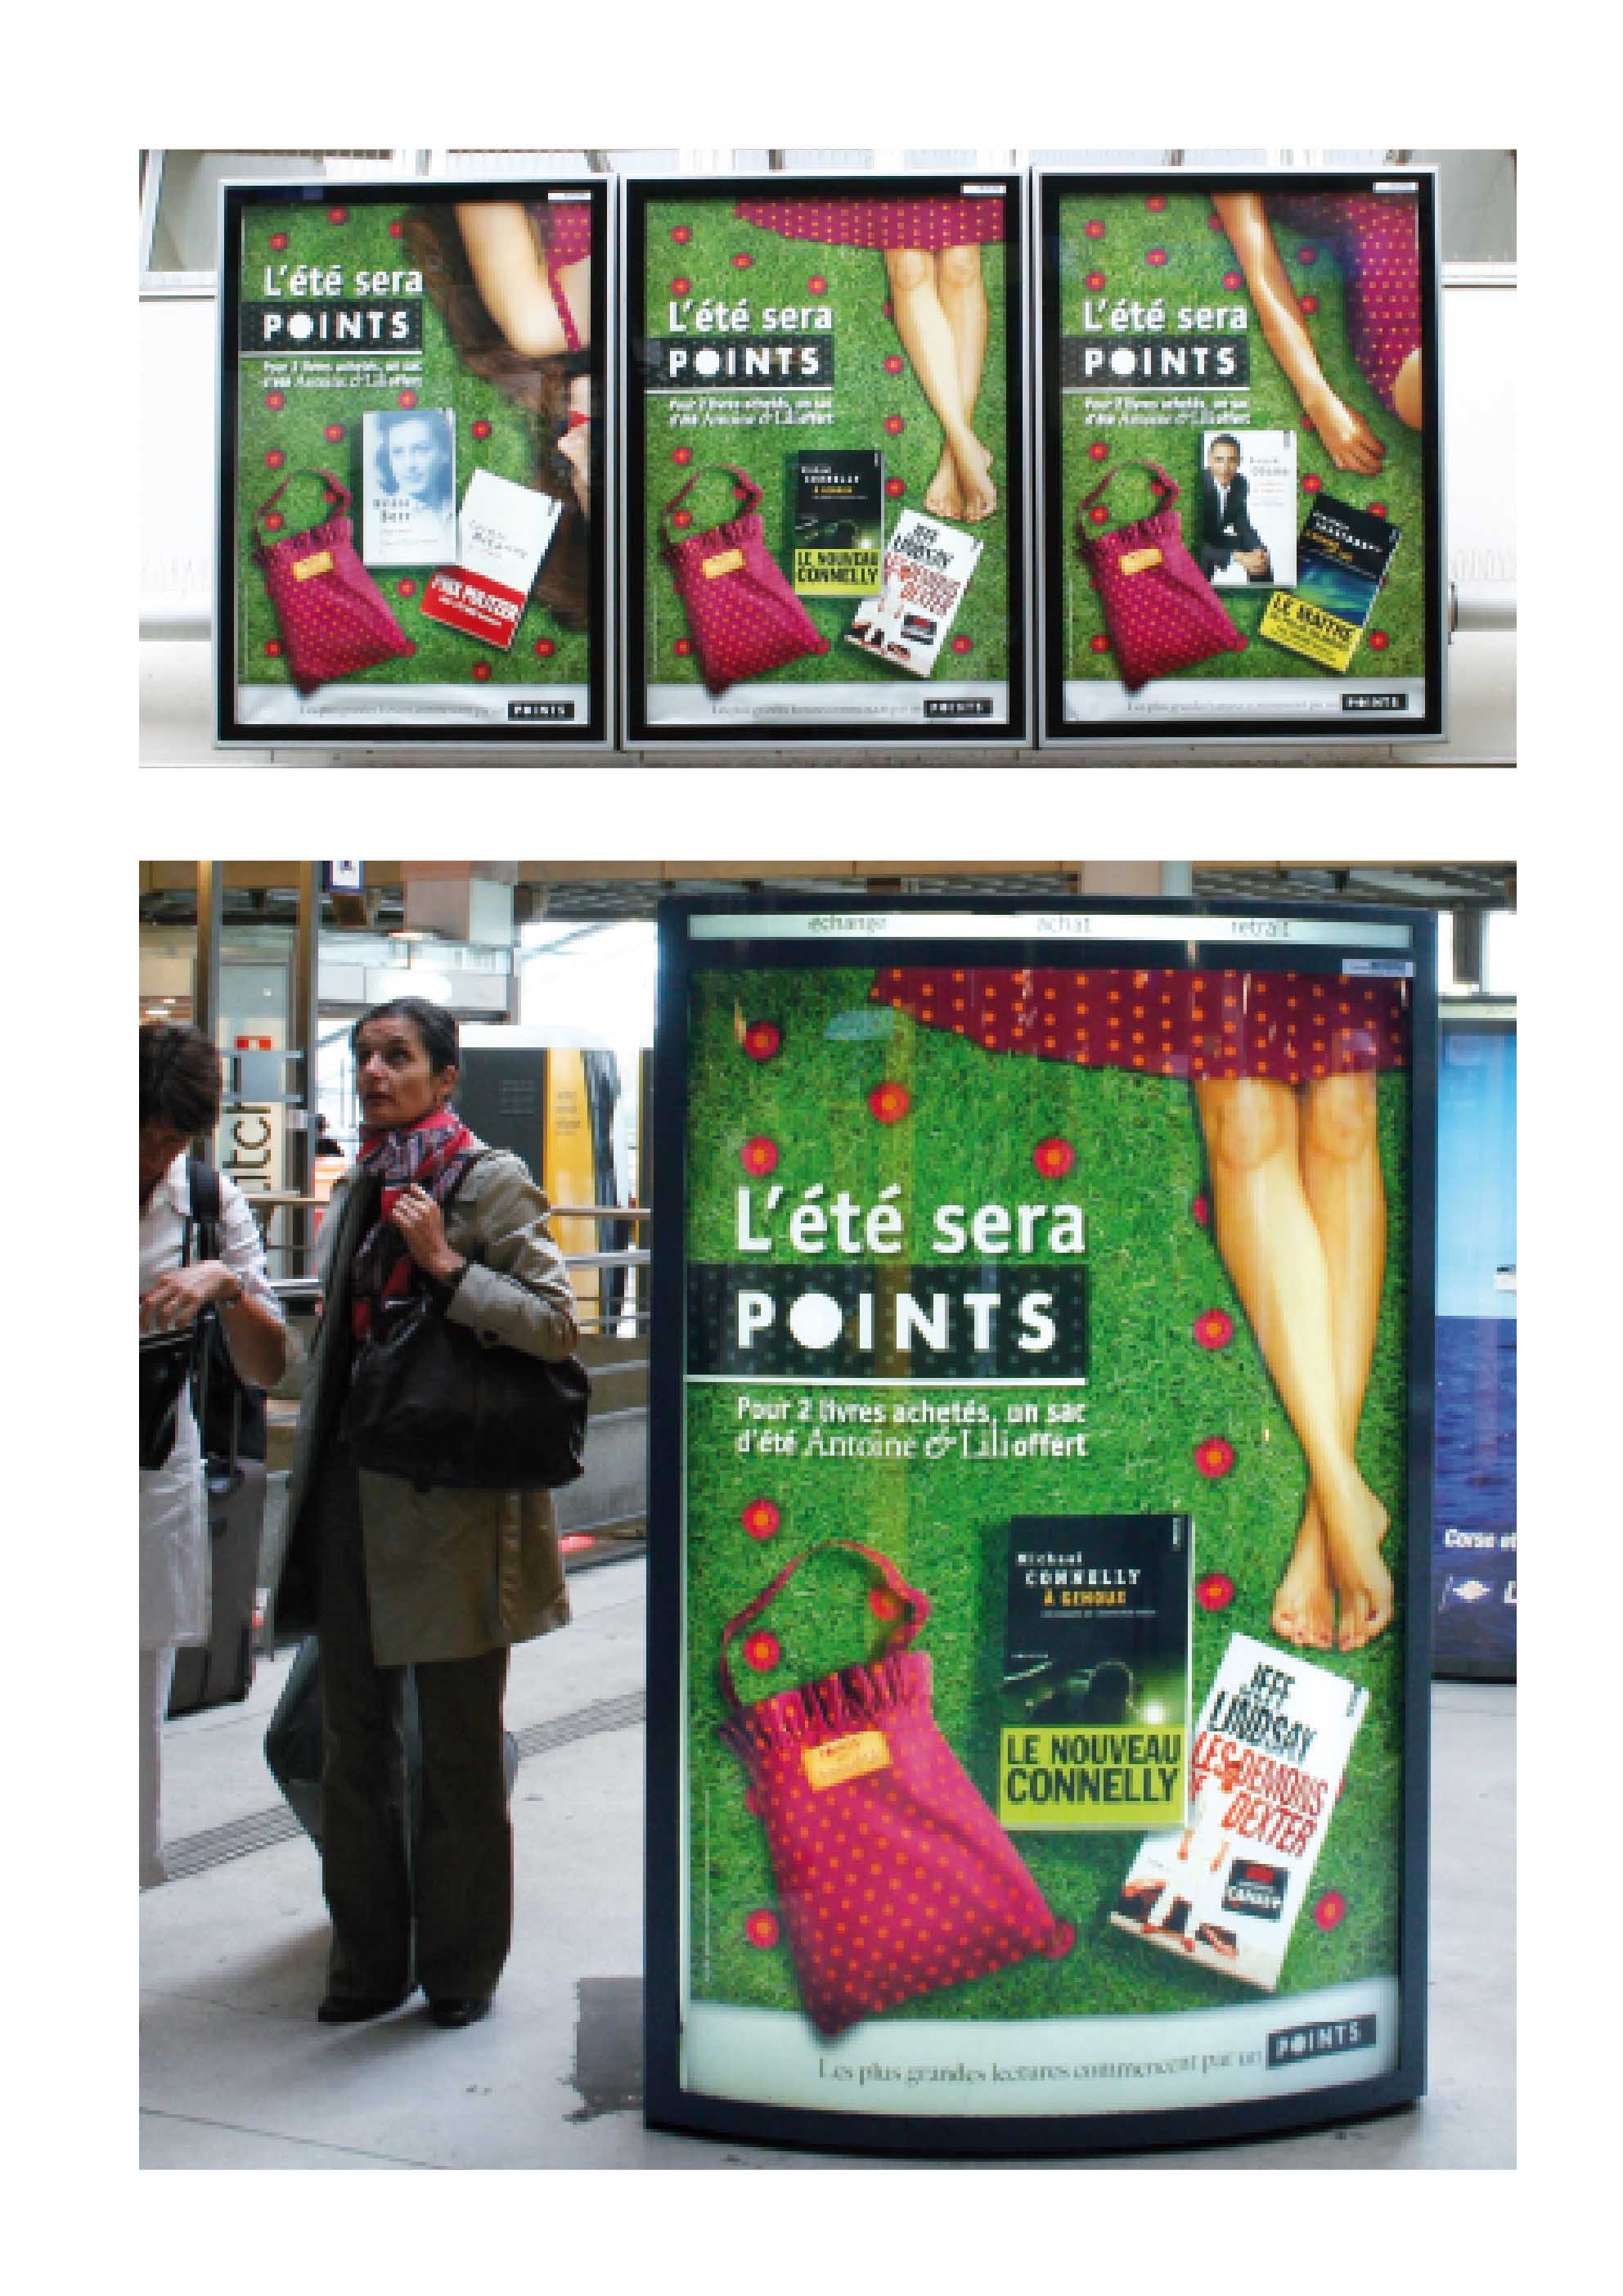 Points Antoine et Lili // Campagne affichage t